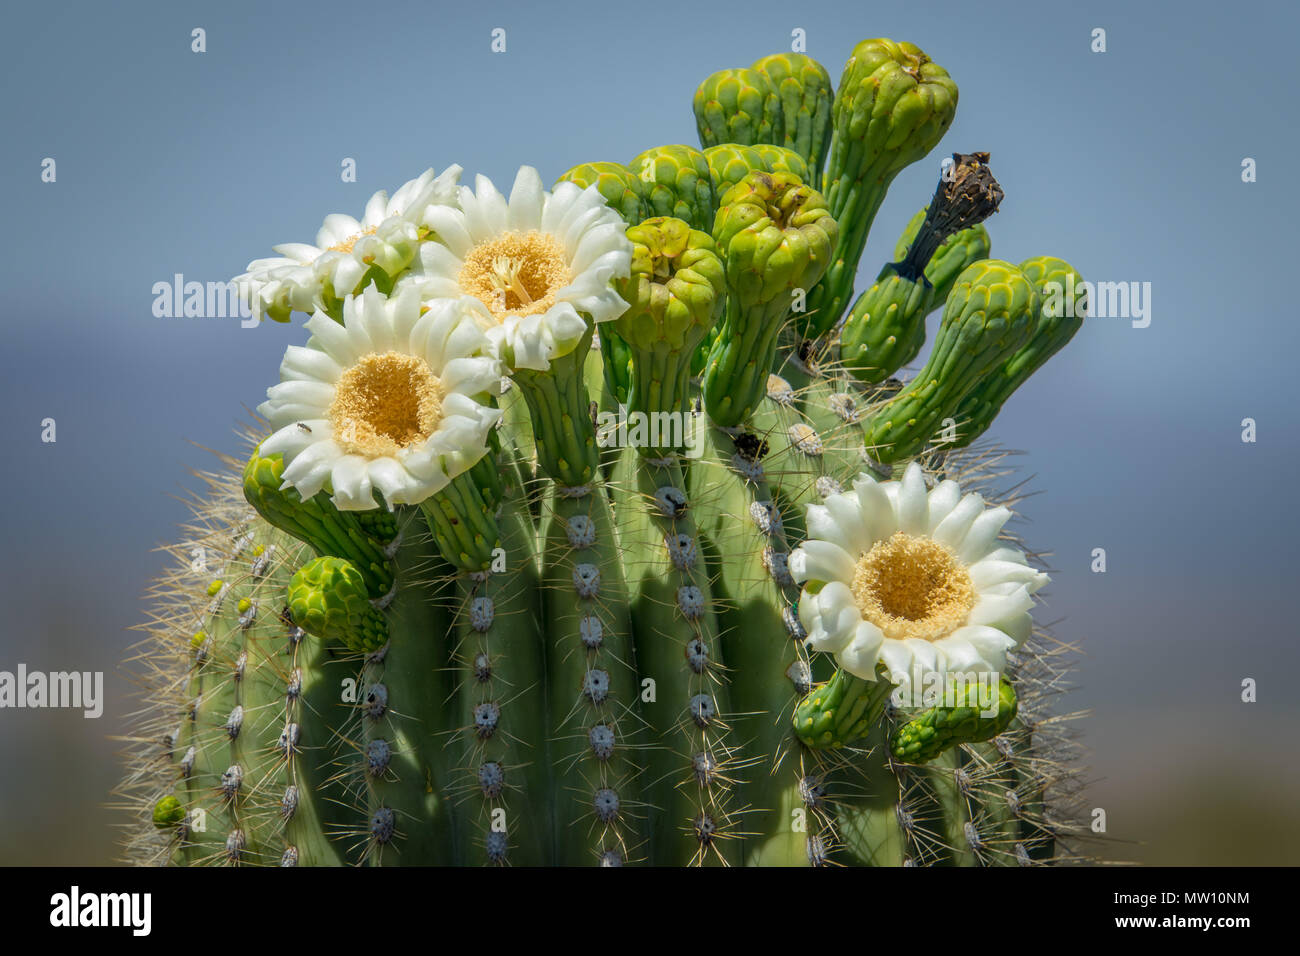 Saguaro Cactus Flowers and Fruit Stock Photo